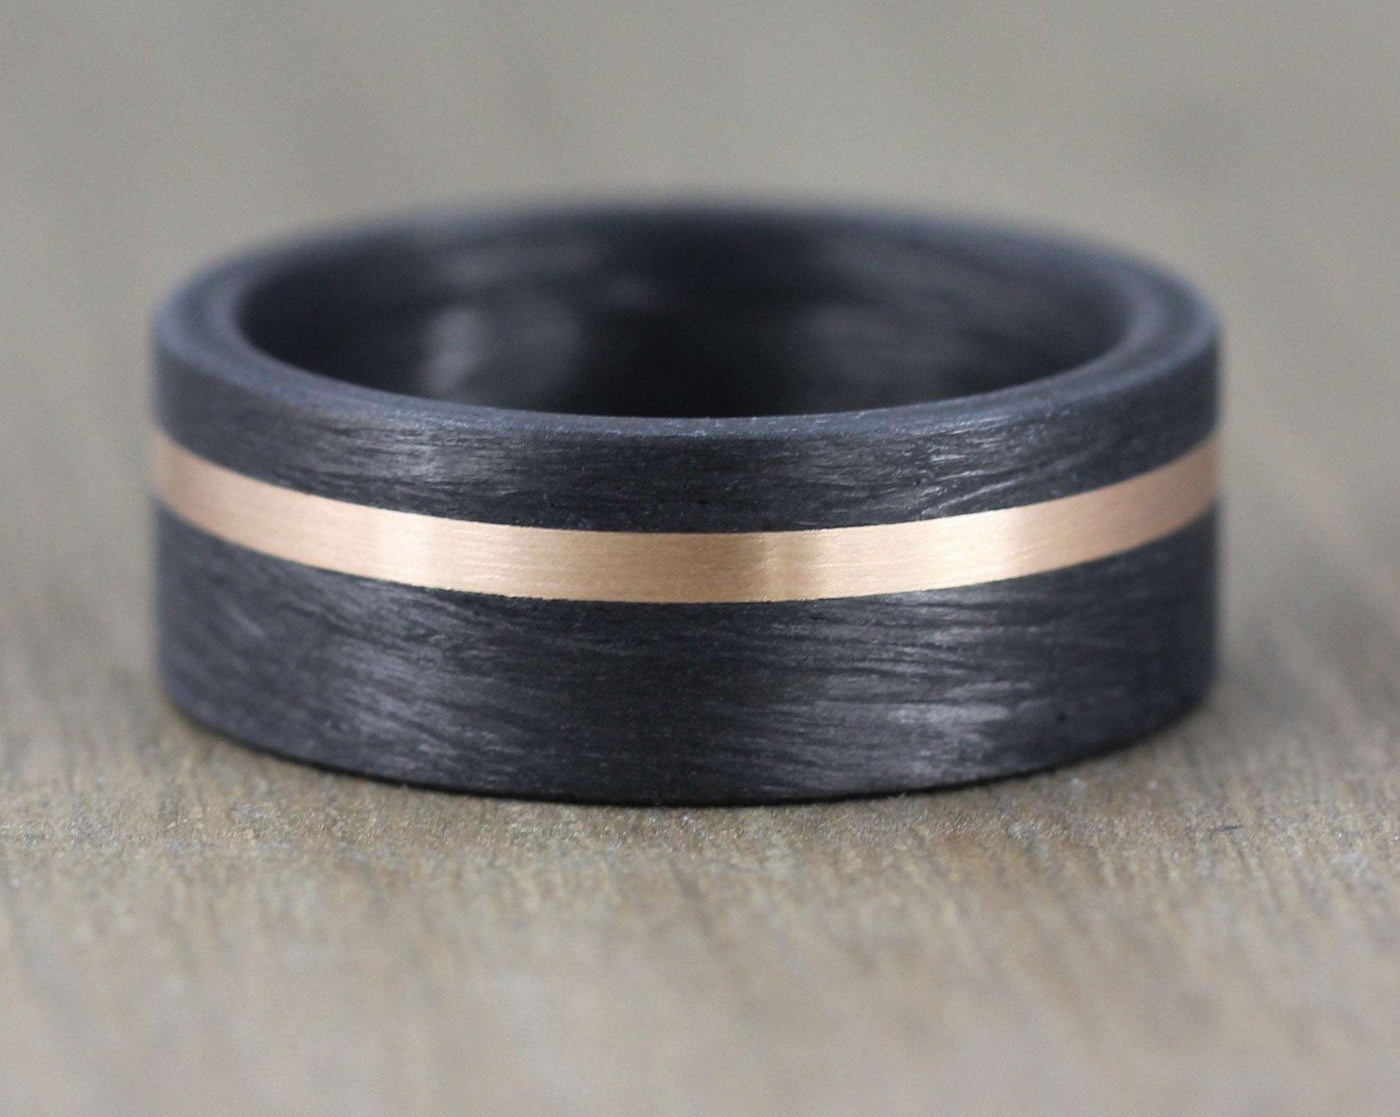 8mm Carbon Fibre wedding band with 2mm rose gold inlay. Comfort fit black carbon fibre wedding ring band. 8mm wide with a stripe of rose gold. black mans wedding ring uk